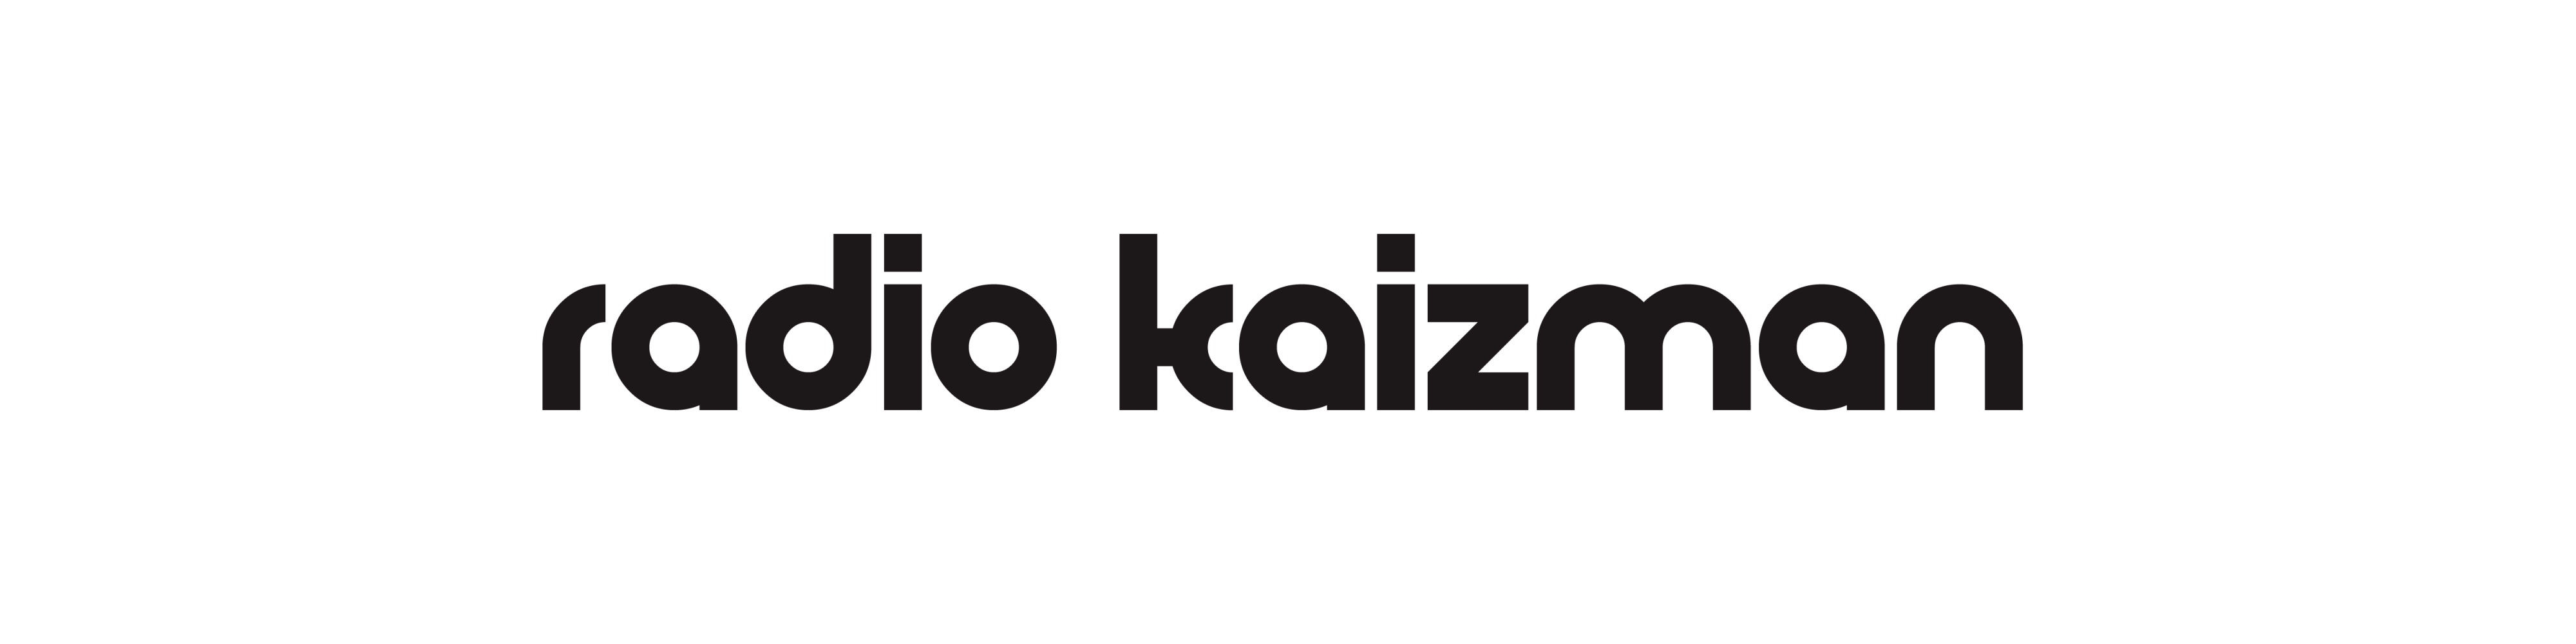 Radio Kaizman - Le Comptoir des Arts